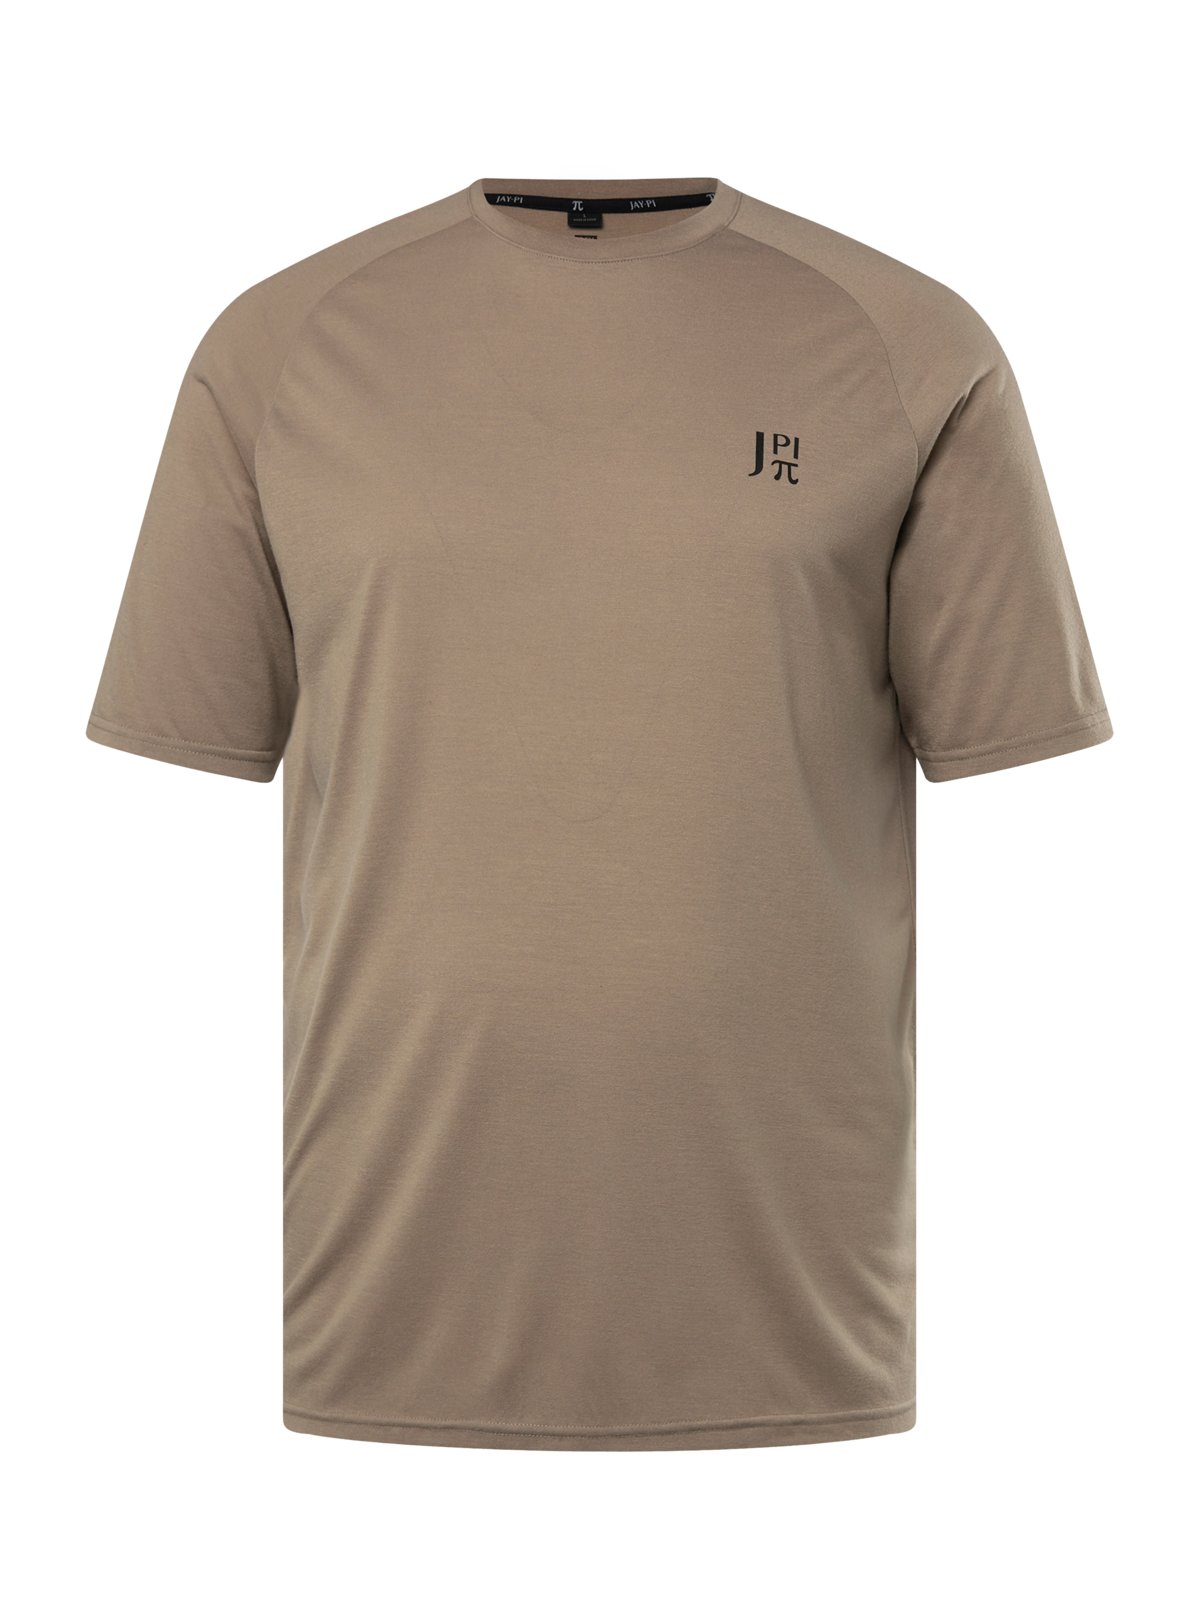 JP1880 T-Shirt für Fitness- & Sportaktivitäten, quick dry